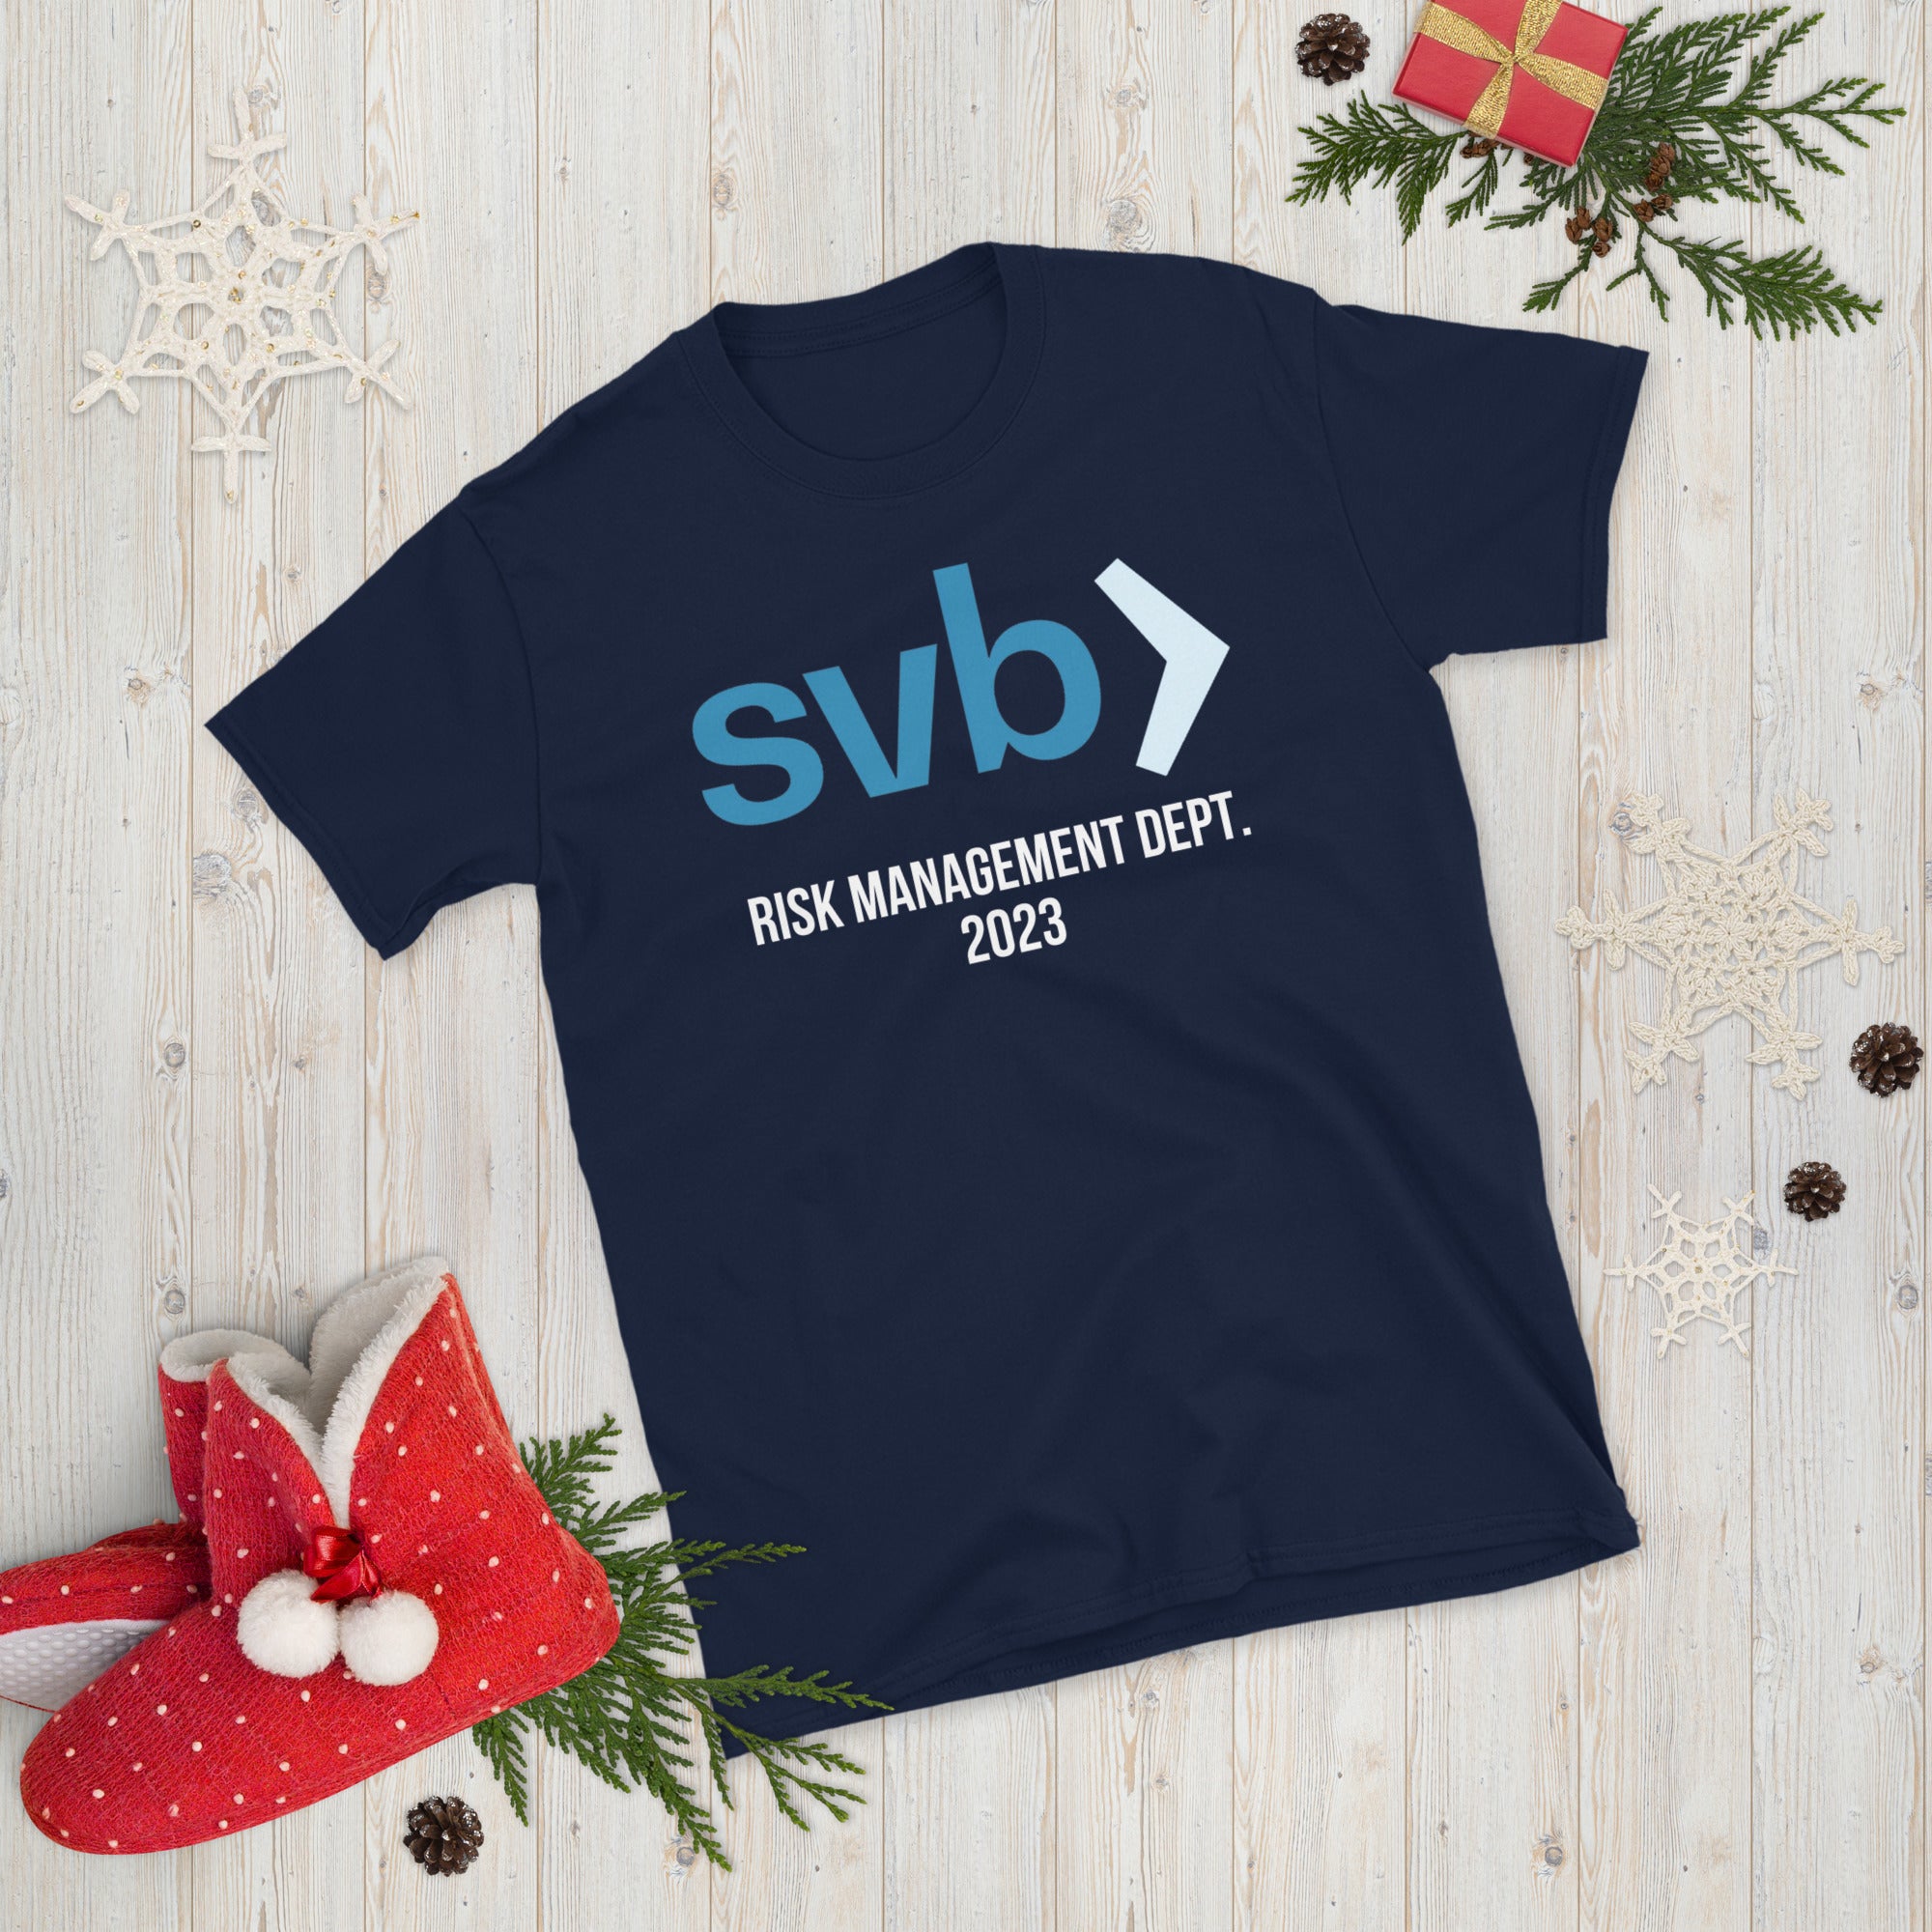 SVB Silicon Valley Bank Risk Management Shirt, SVB Bank Run, Risk Management Dept 2023, Funny Stock Market Tee, SVB Tshirt - Madeinsea©